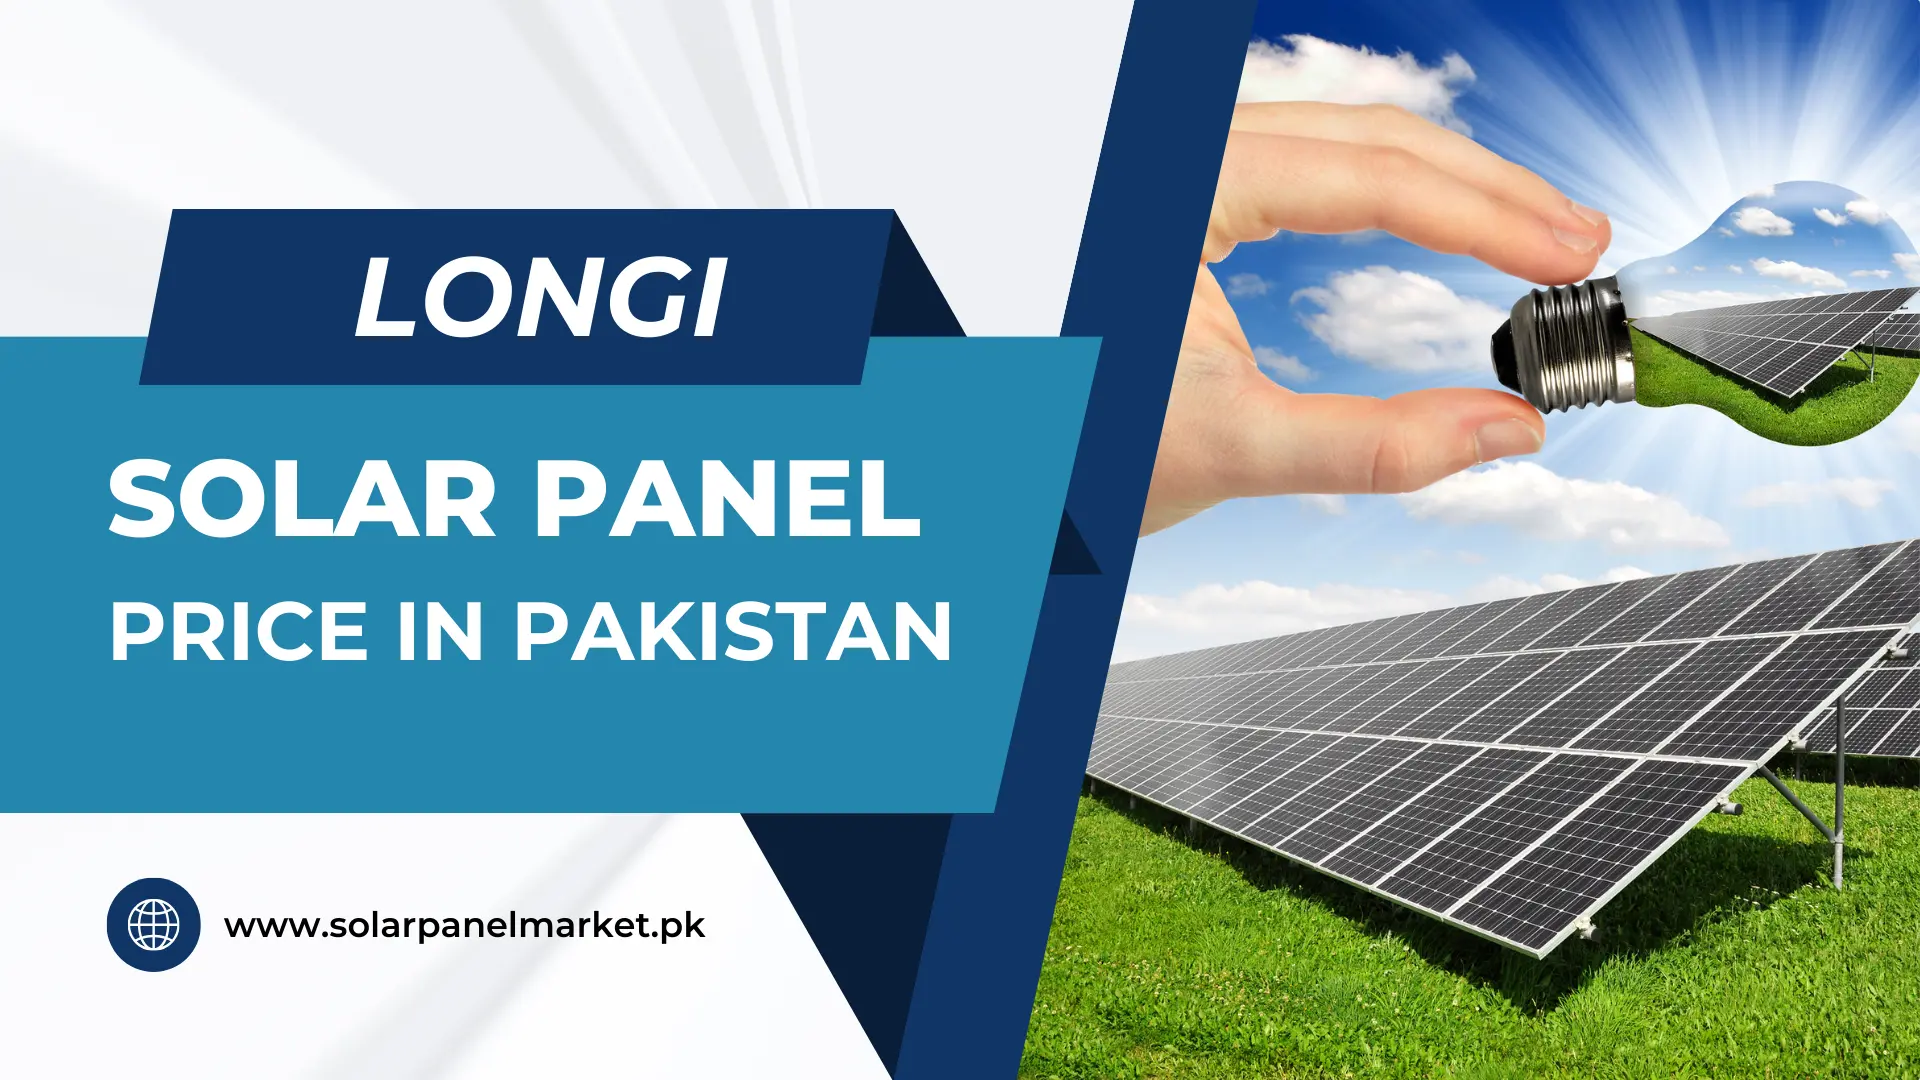 Longi Solar Panel Price image